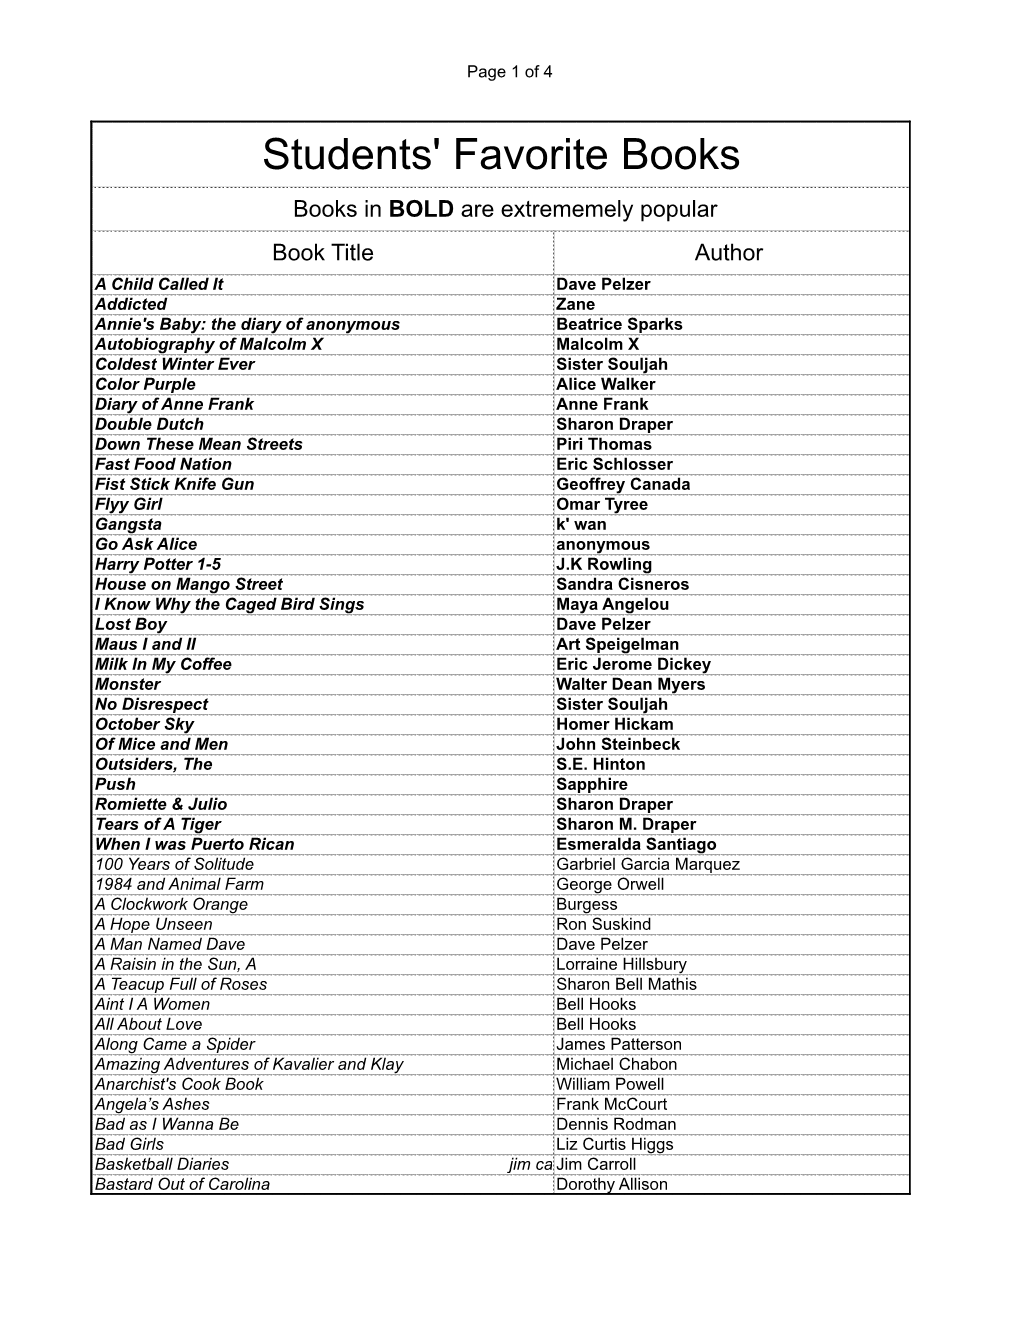 Students' Favorite Books